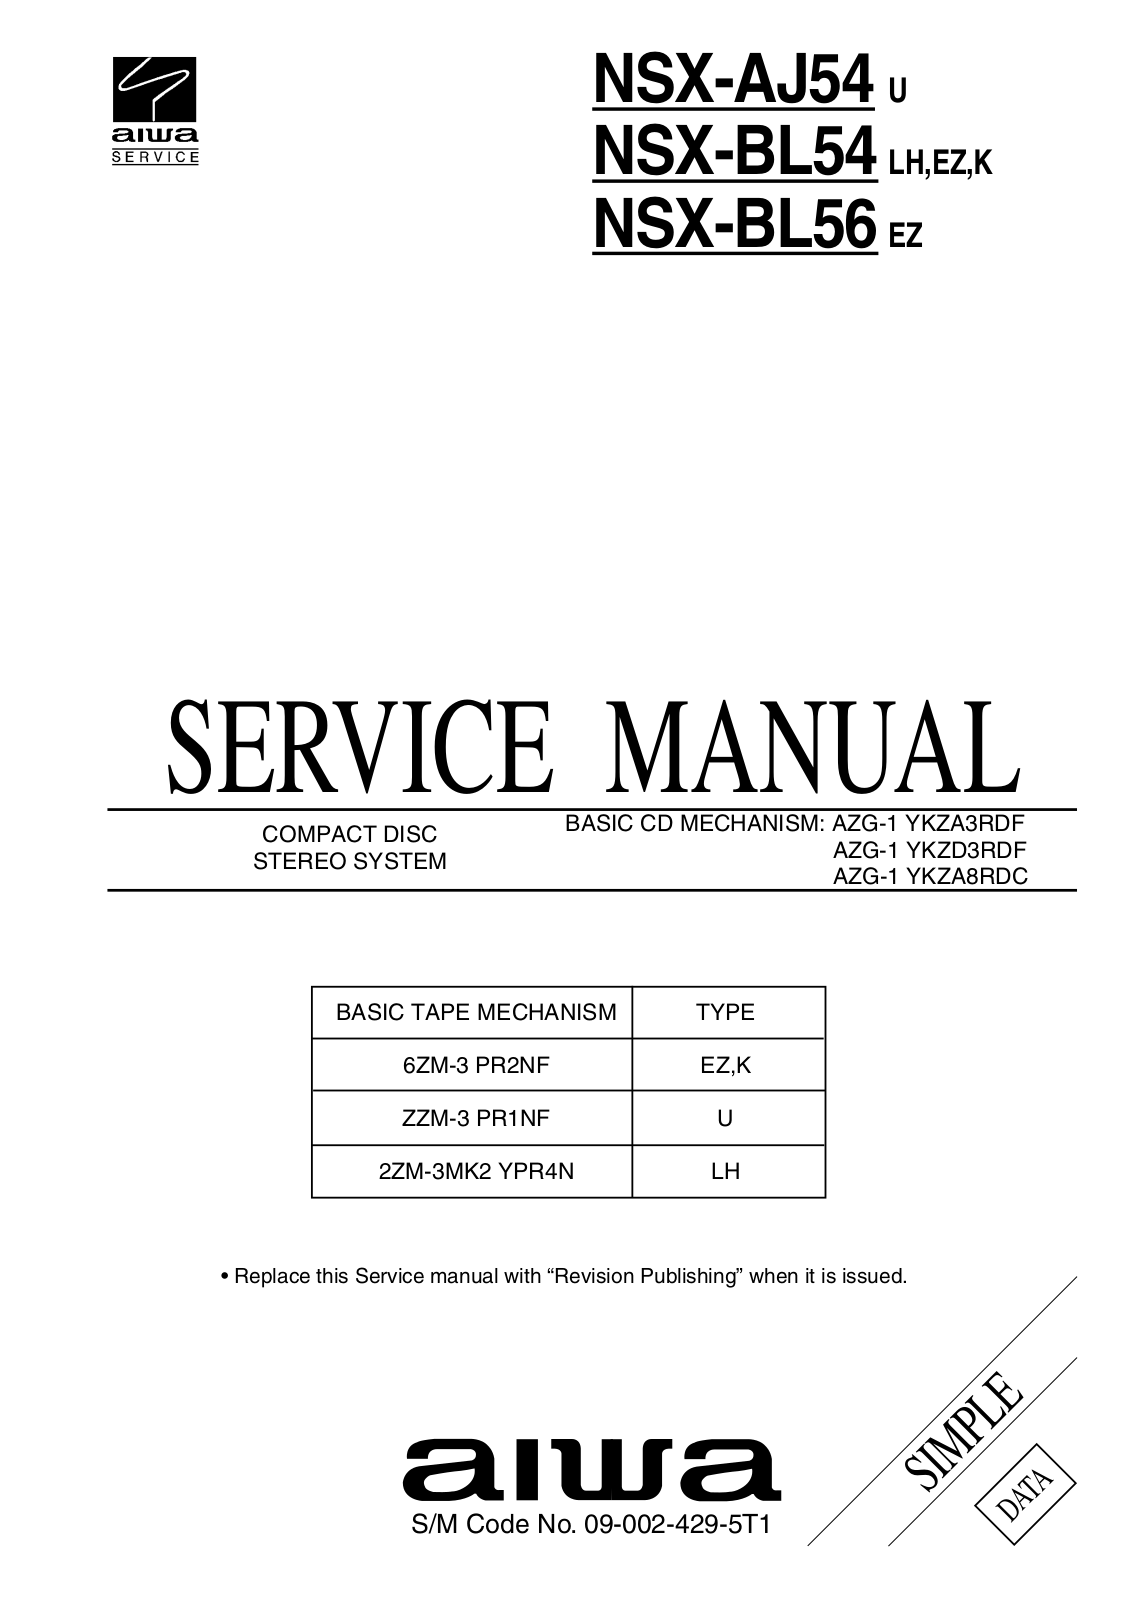 Aiwa NSX-BL56 EZ, NSX-BL54 K, NSX-BL54 EZ, NSX-BL54 LH, NSX-AJ54 U Service Manual